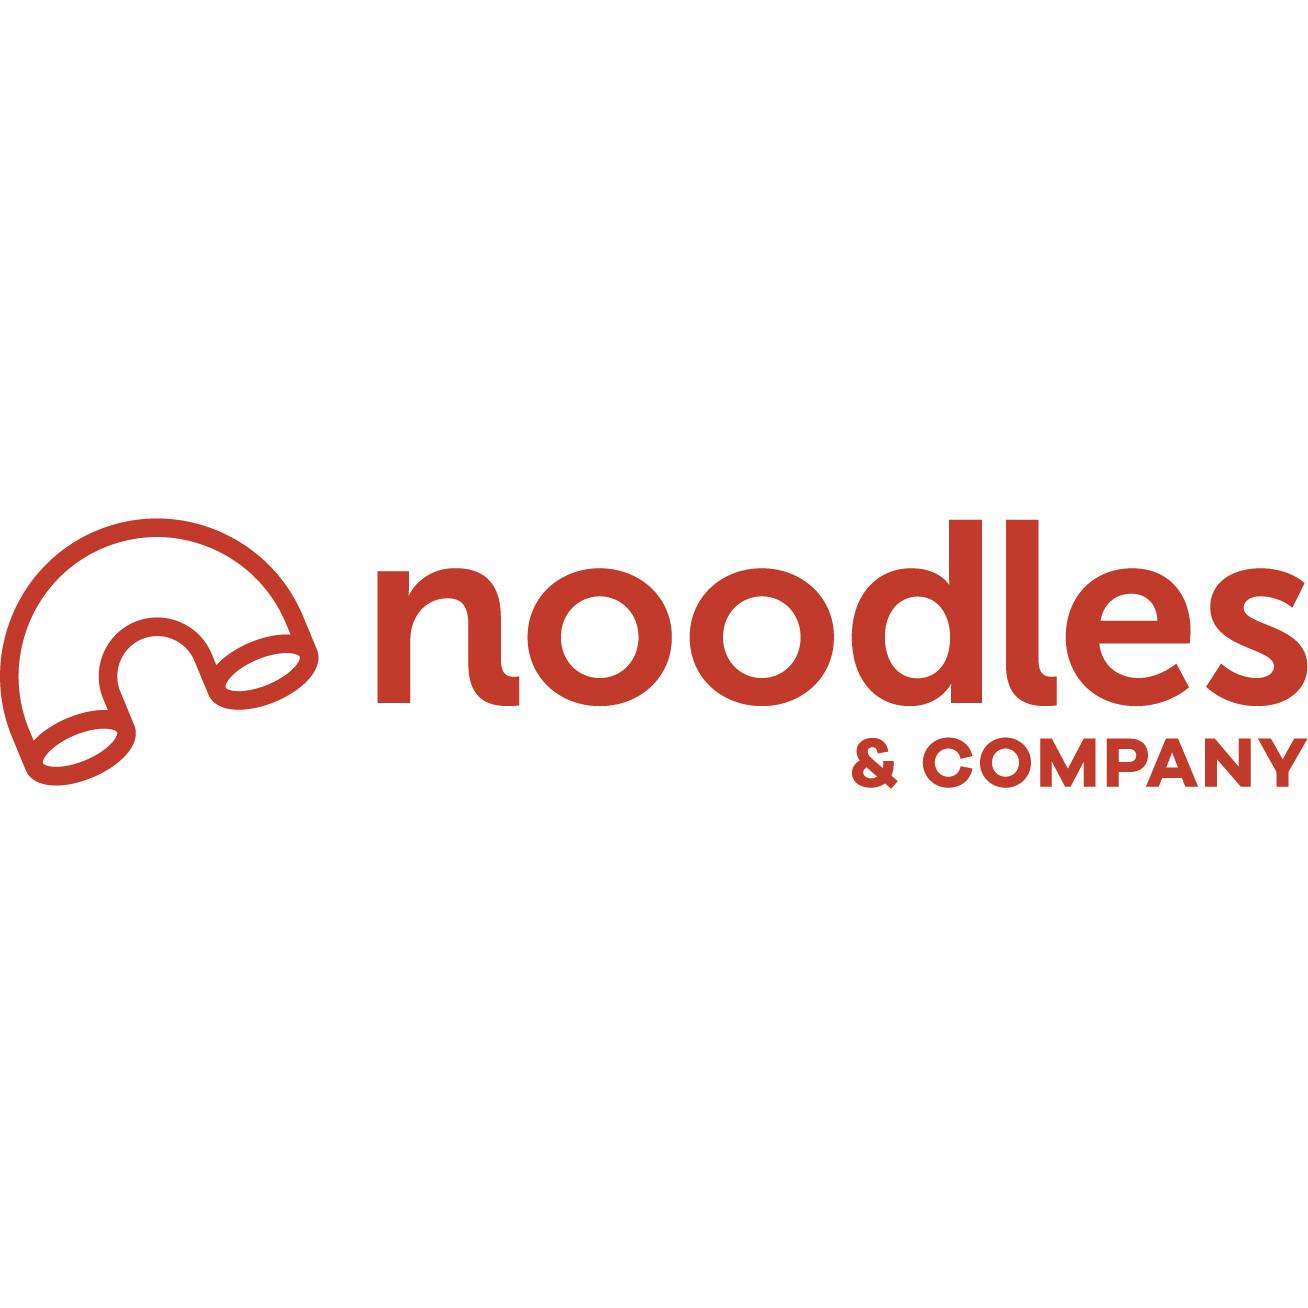 Noodles & Company - Oshkosh Menu and Delivery in Oshkosh WI, 54902